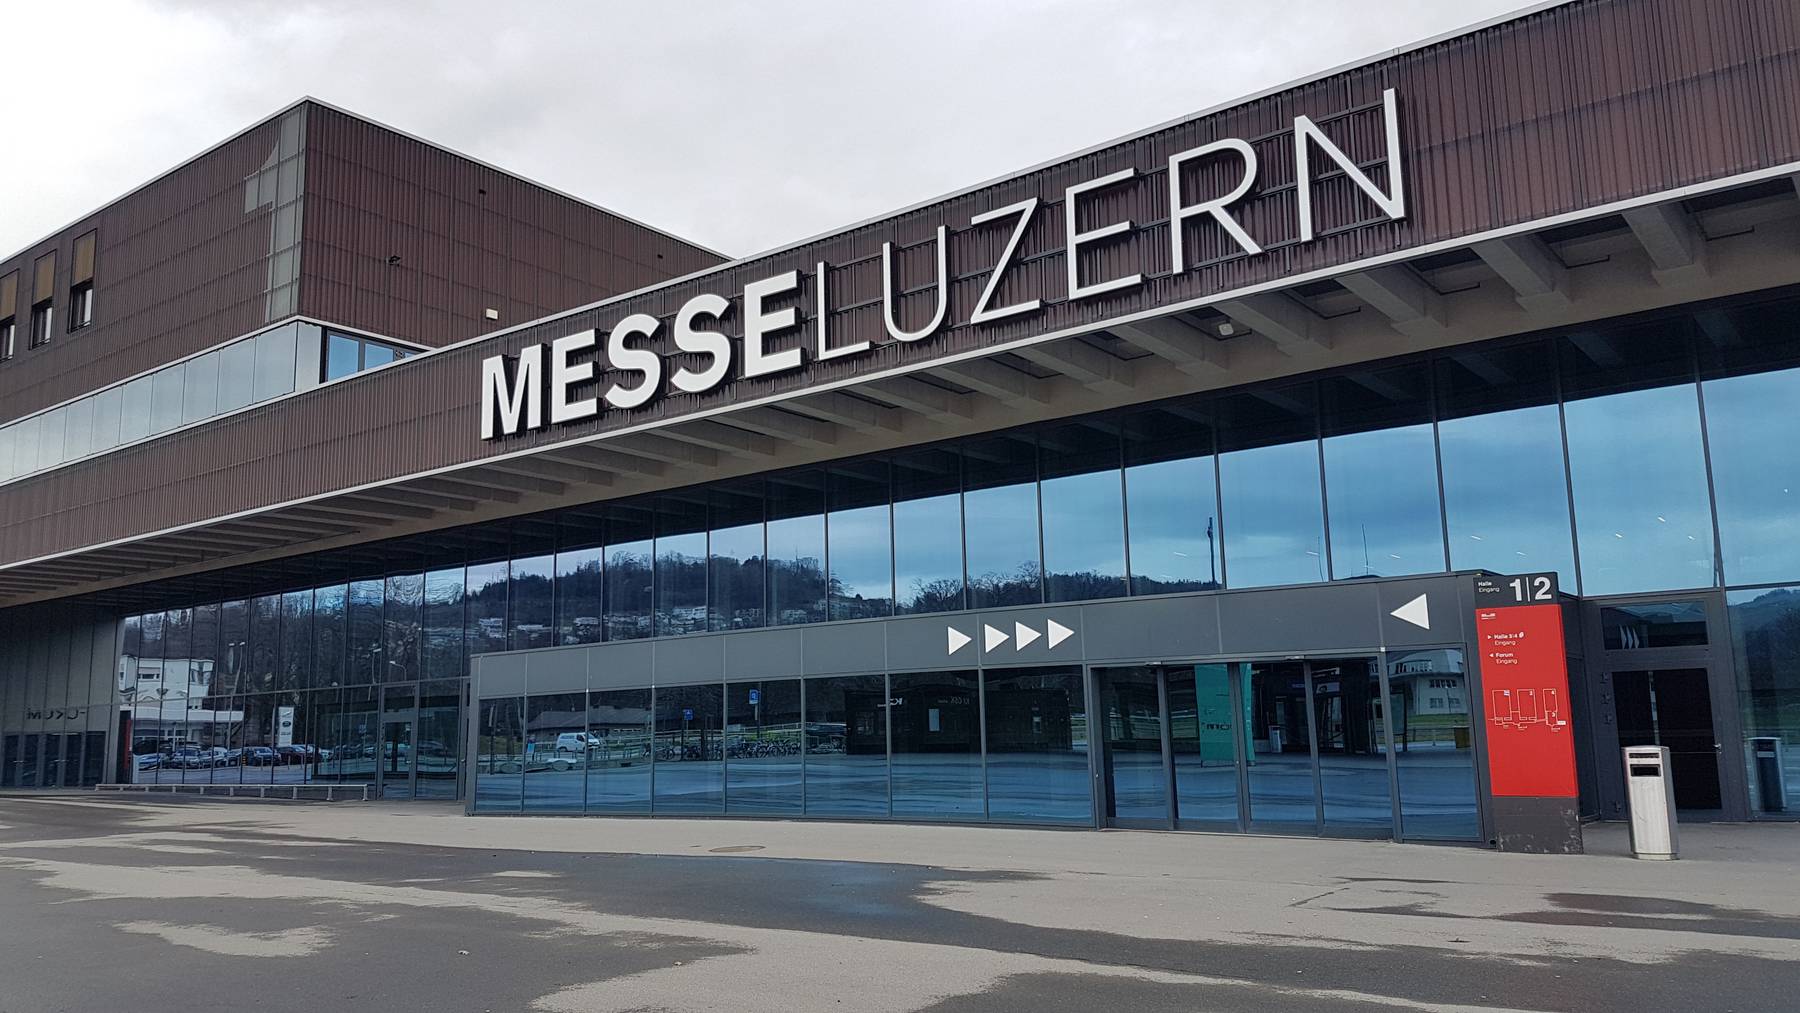 Messe Luzern